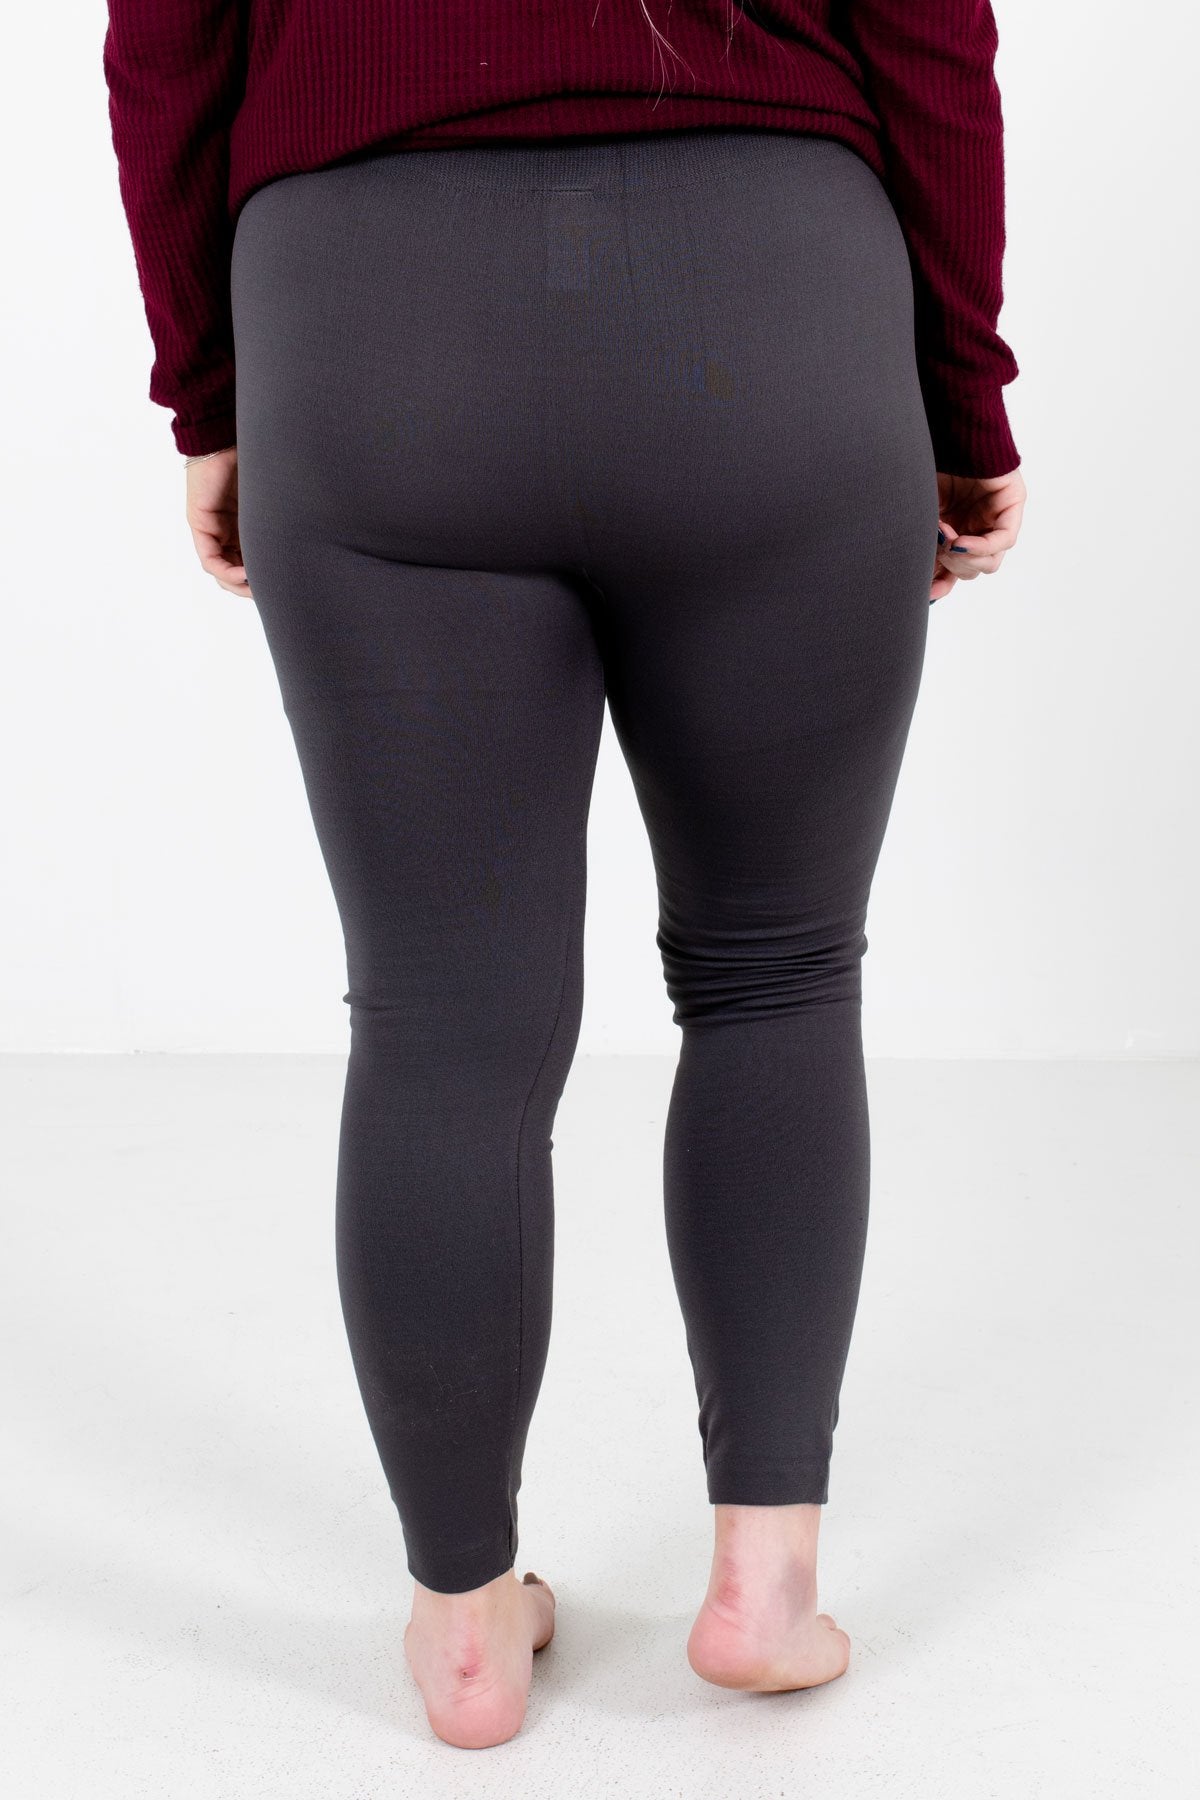 Womens Black Leggings Plus Size Spandex Curvy Pants Solid New Soft